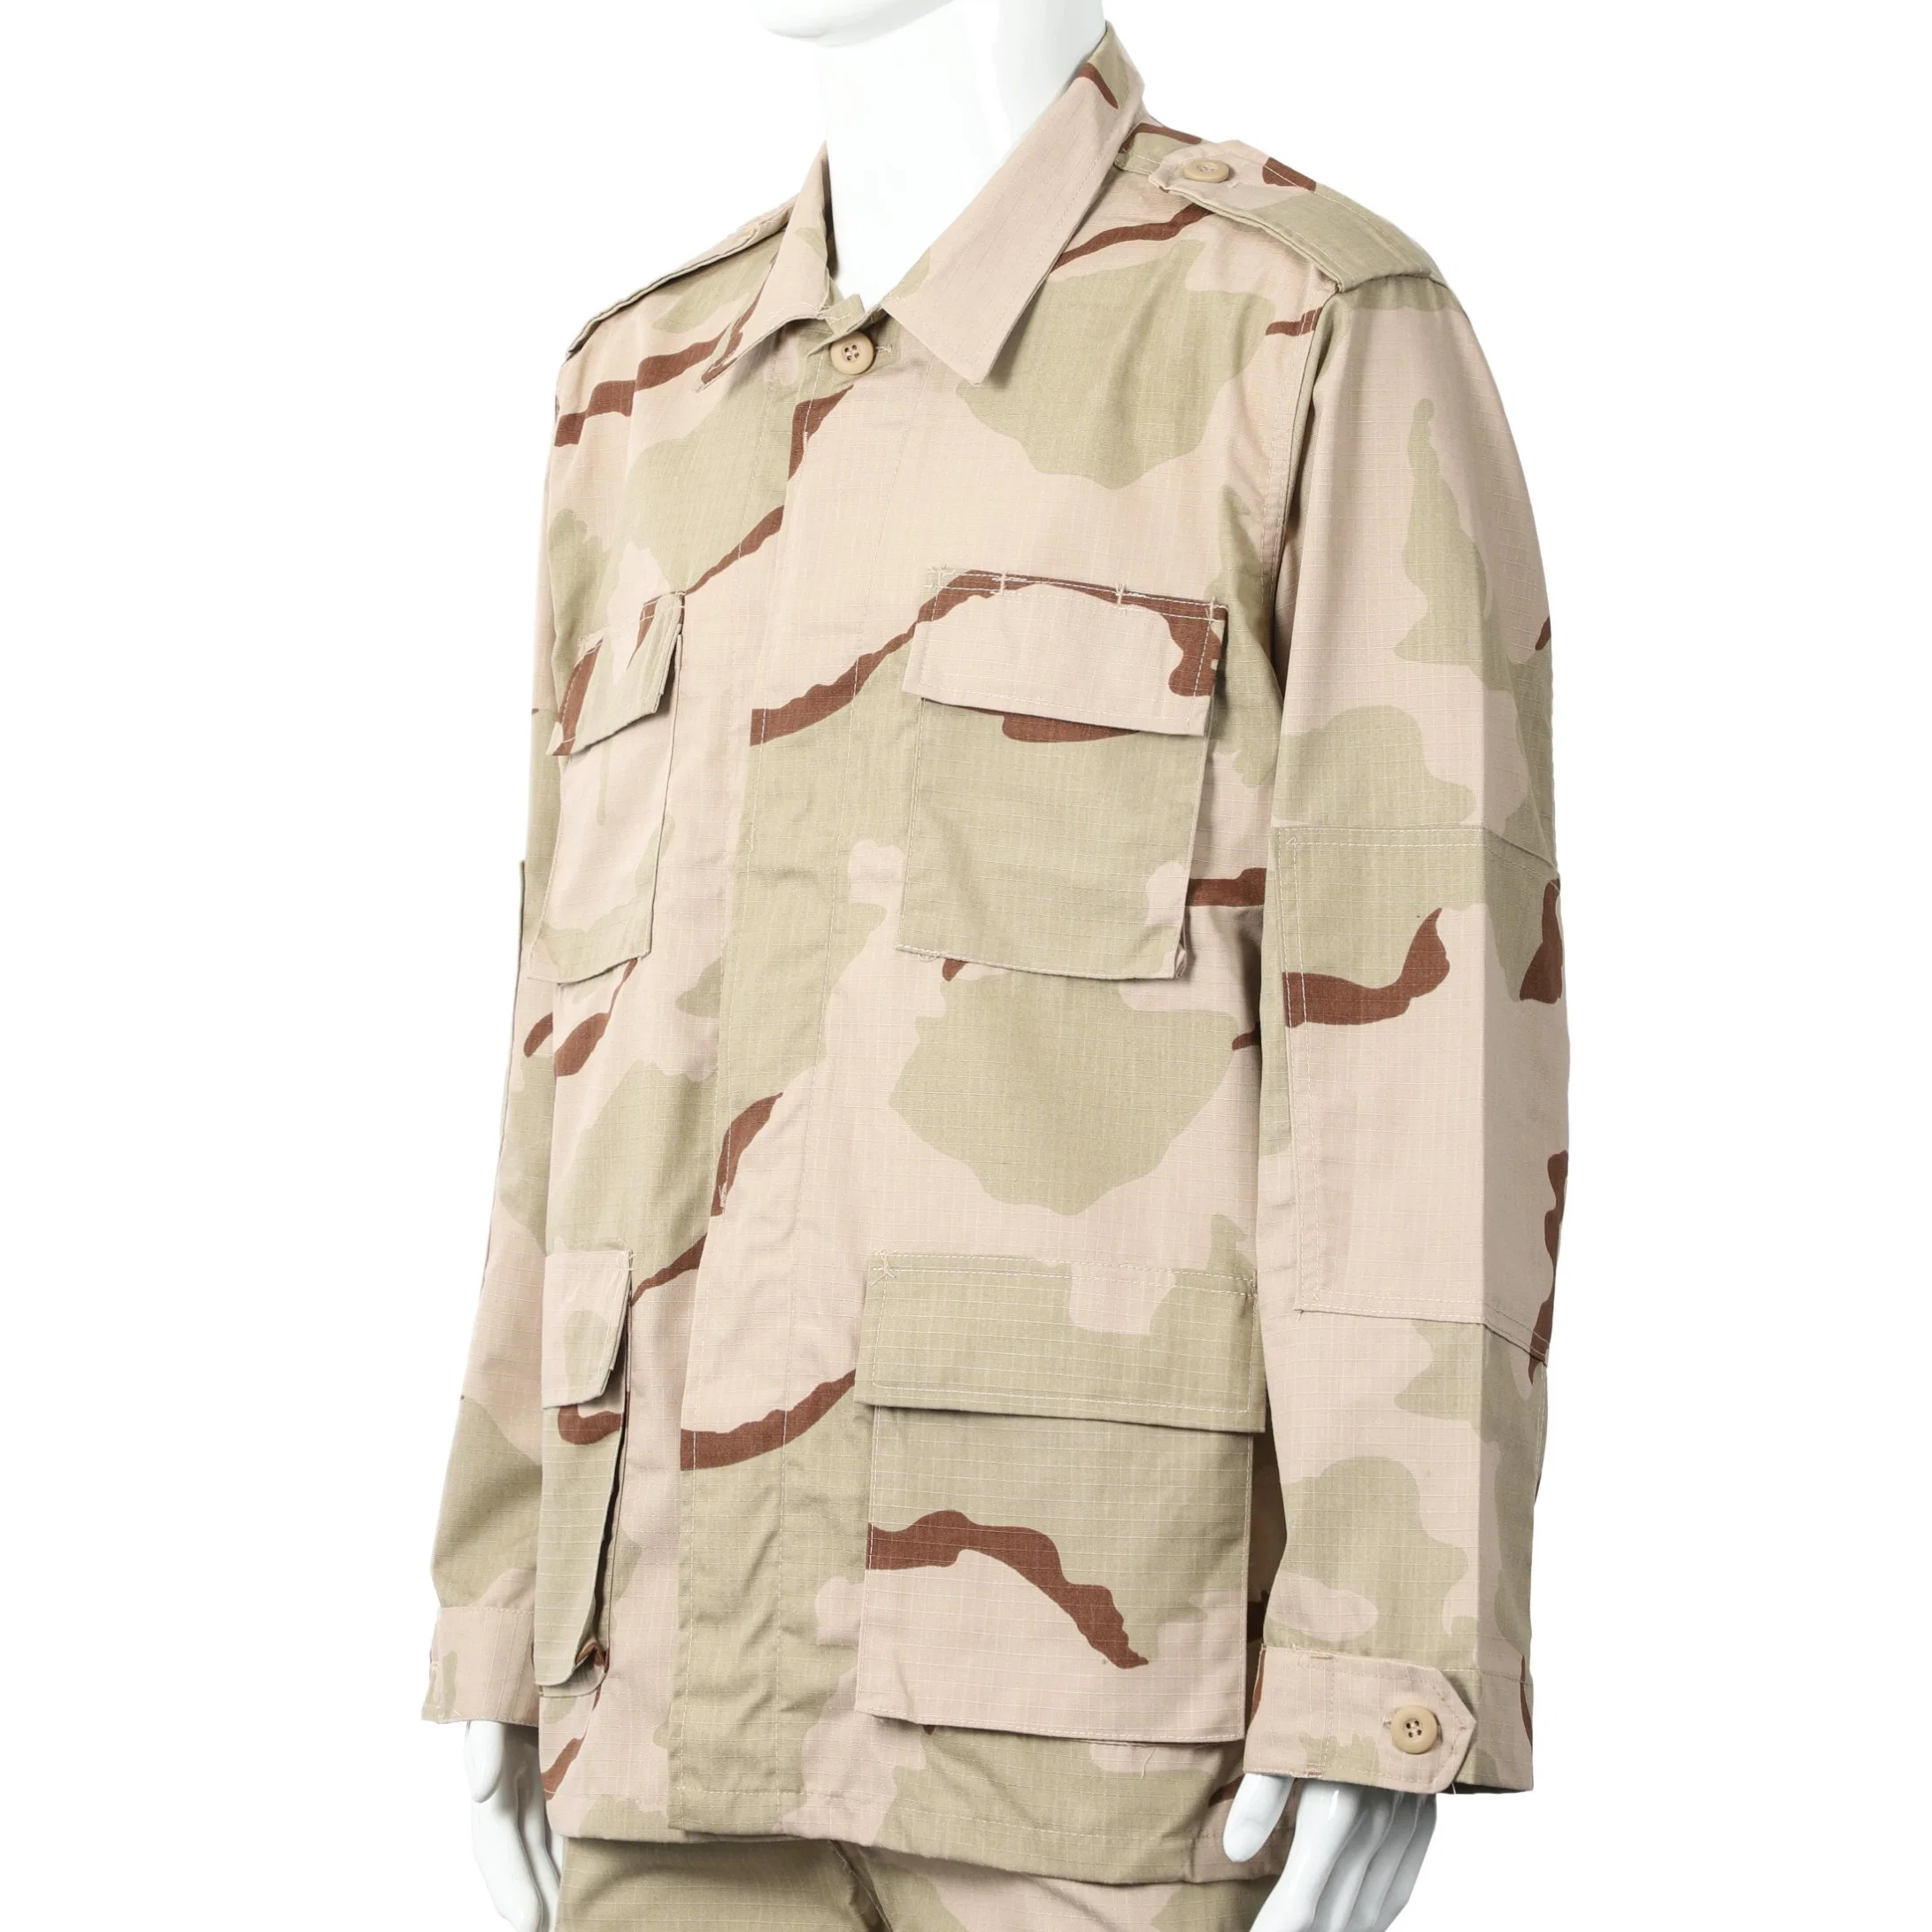 Comfortable Bdu Uniform Military Style Clothing